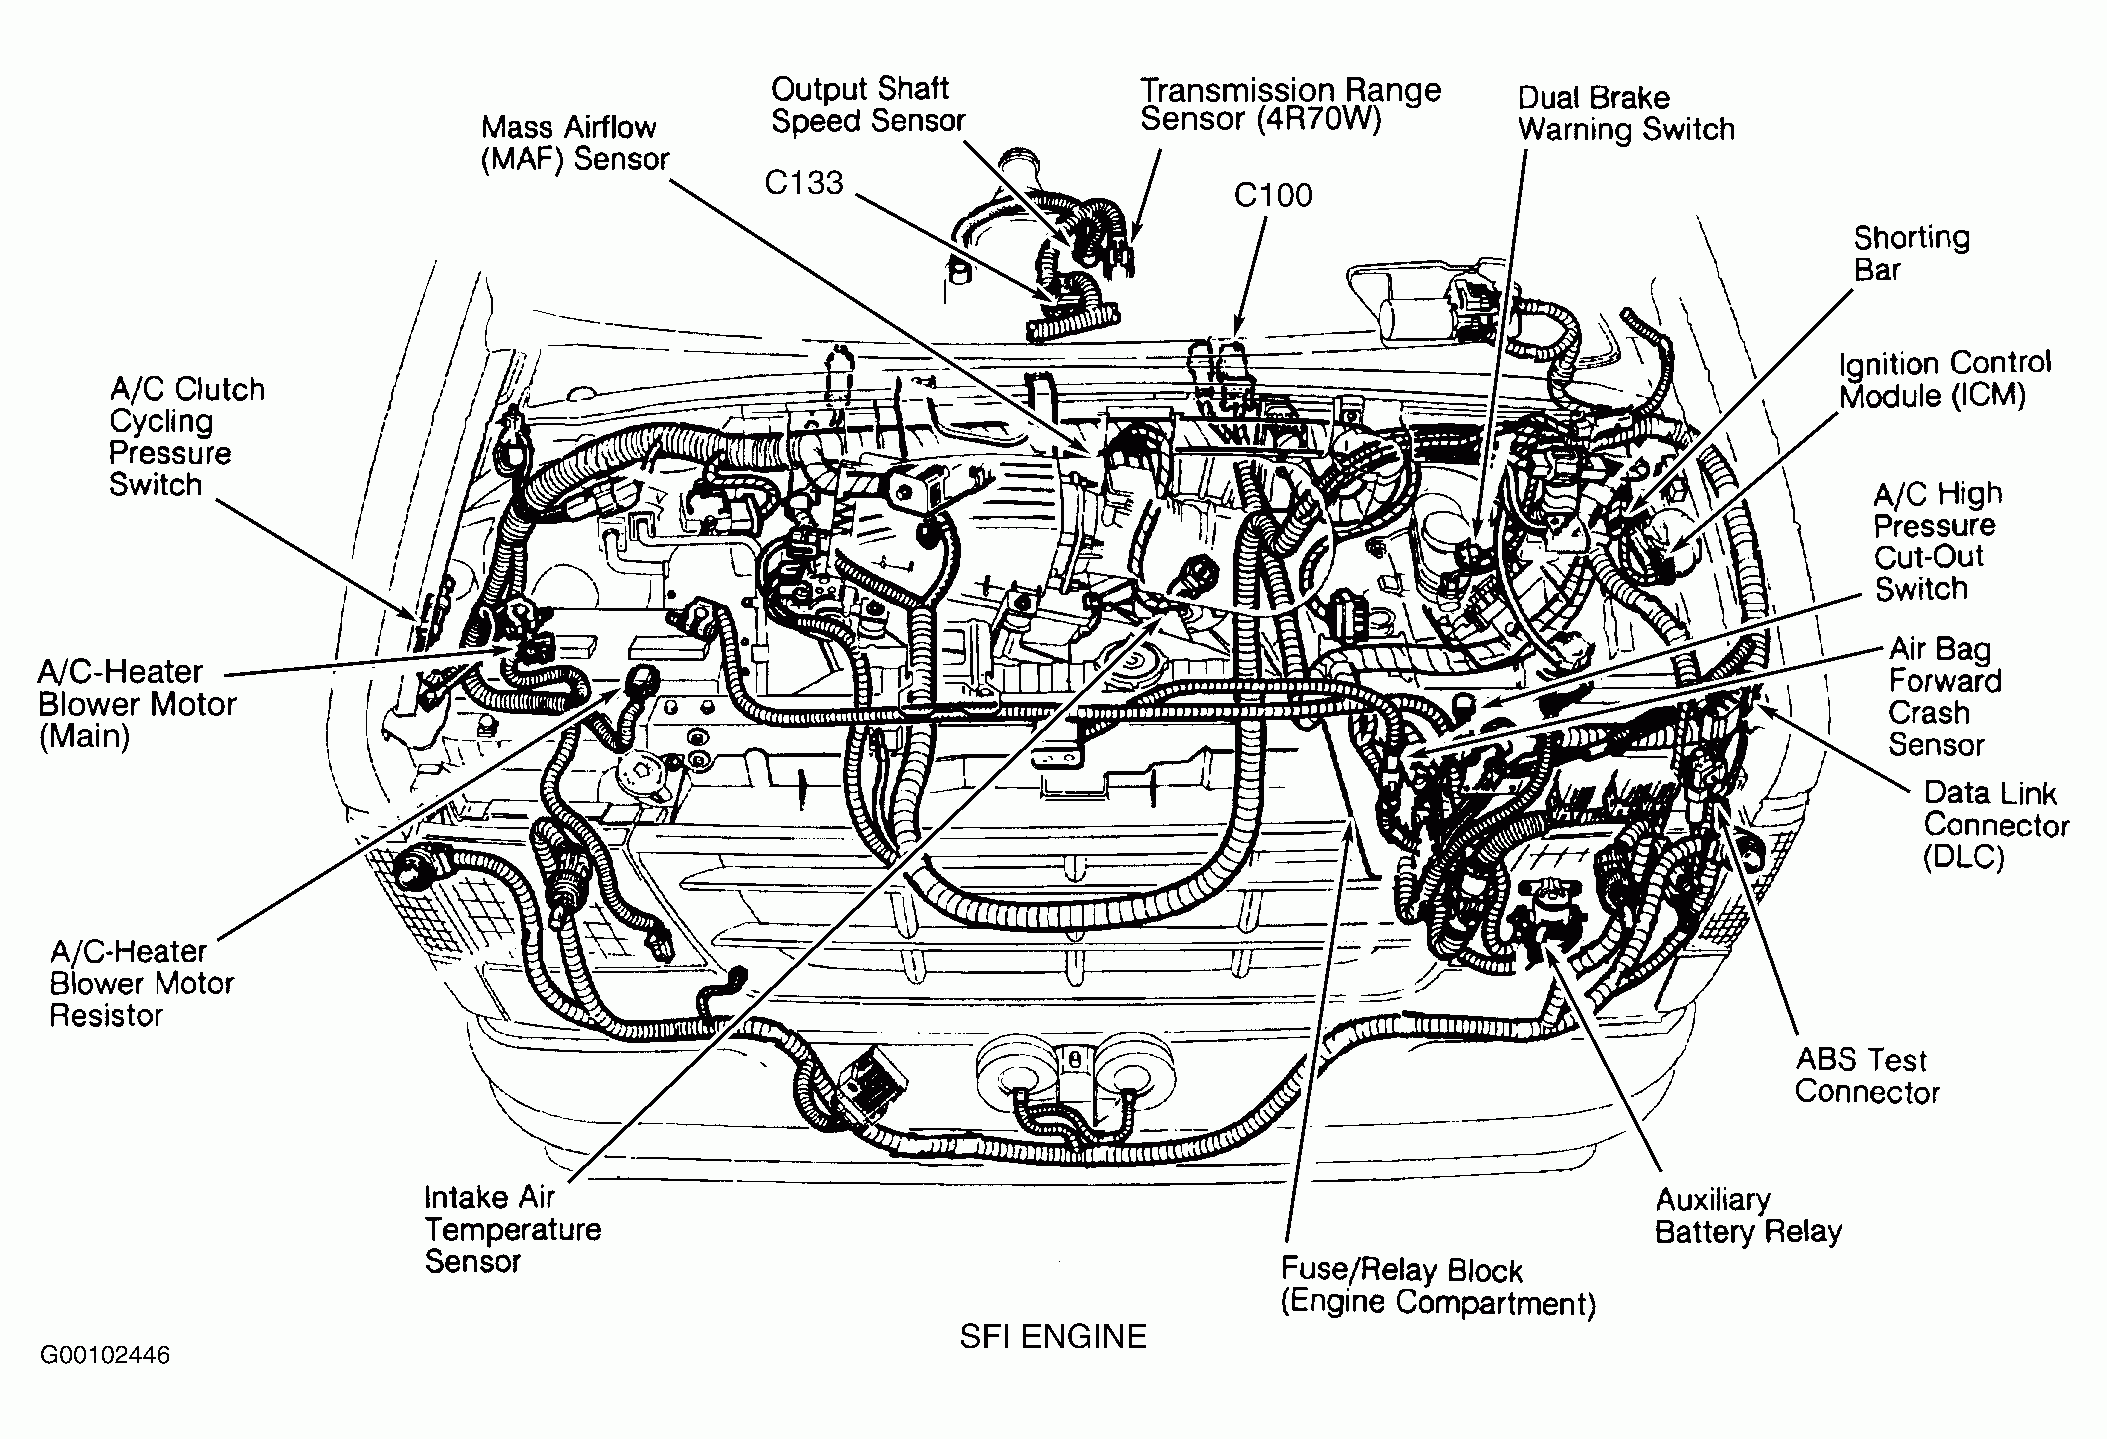 Diagram] 1994 E 250 Ford Van Wiring Diagramof 5 8 Engine